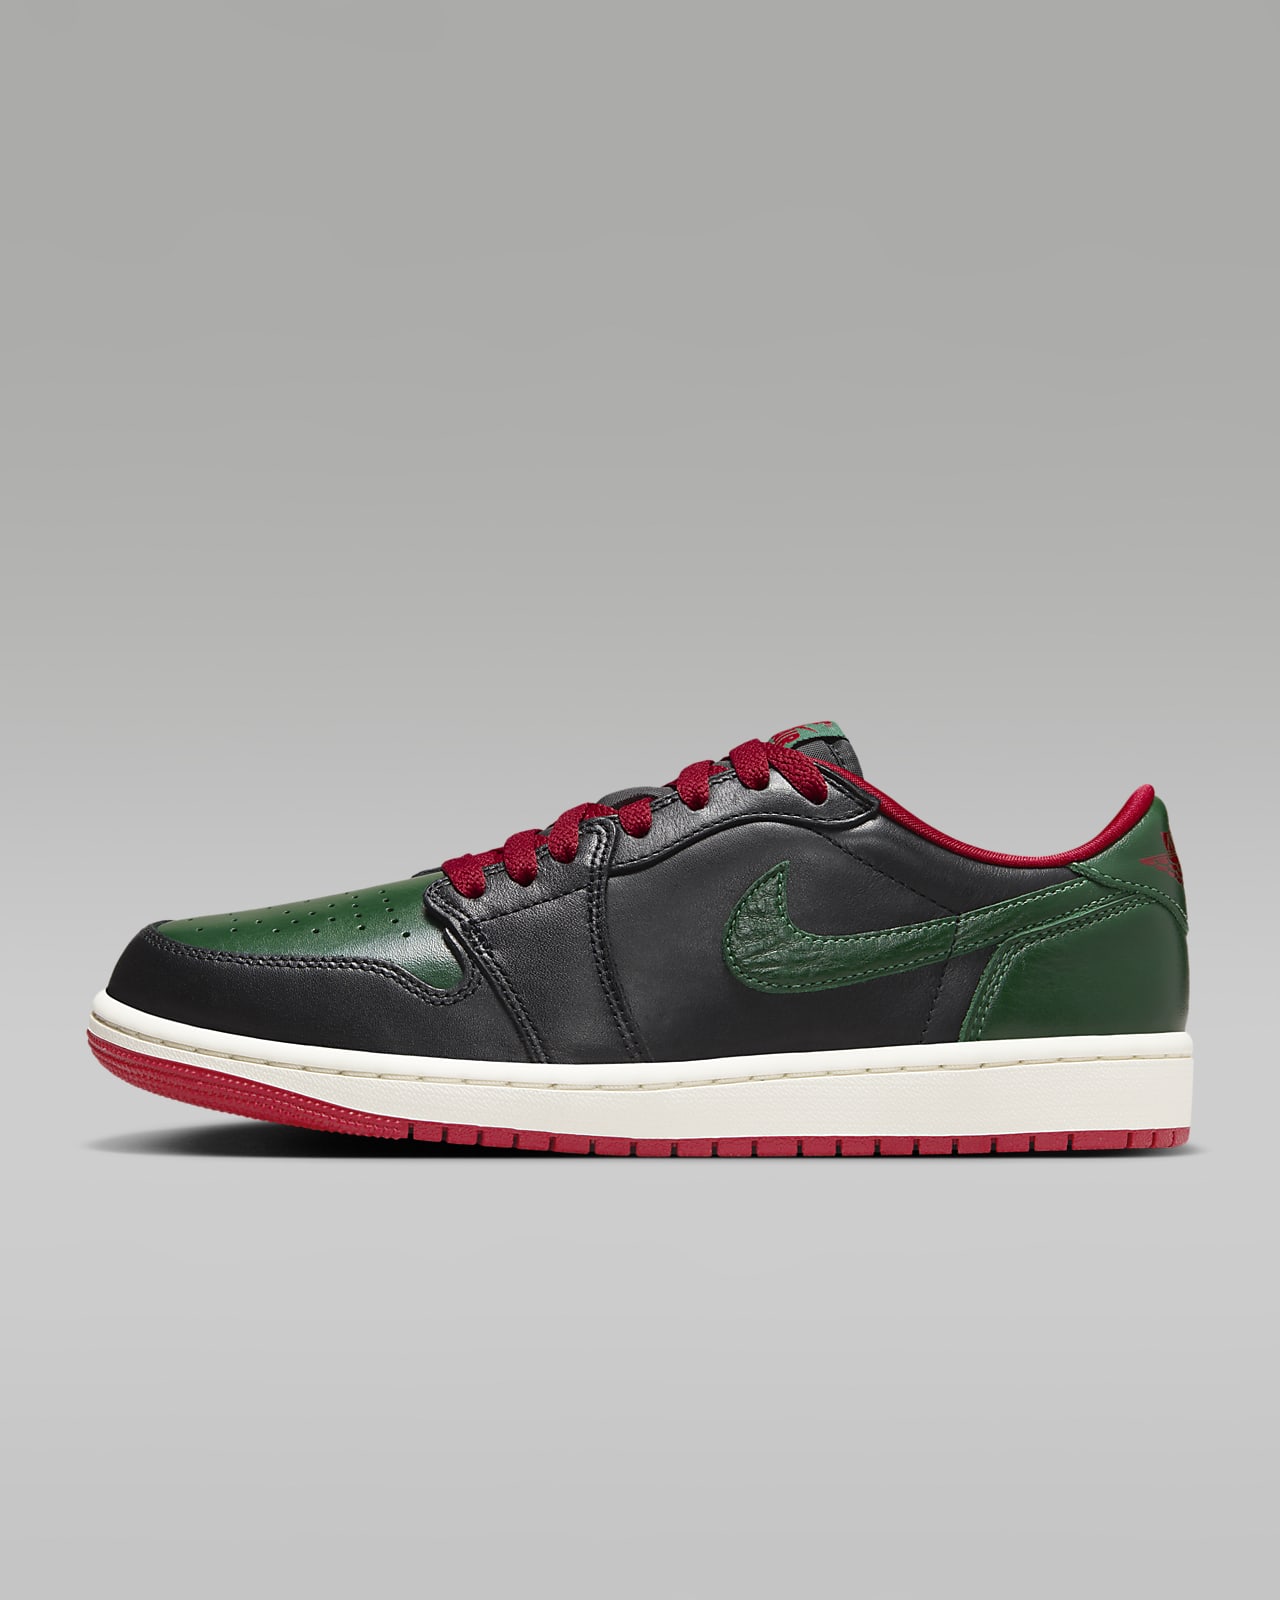 Air Jordan 1 Low OG 'Black/Gorge Green' Women's Shoes